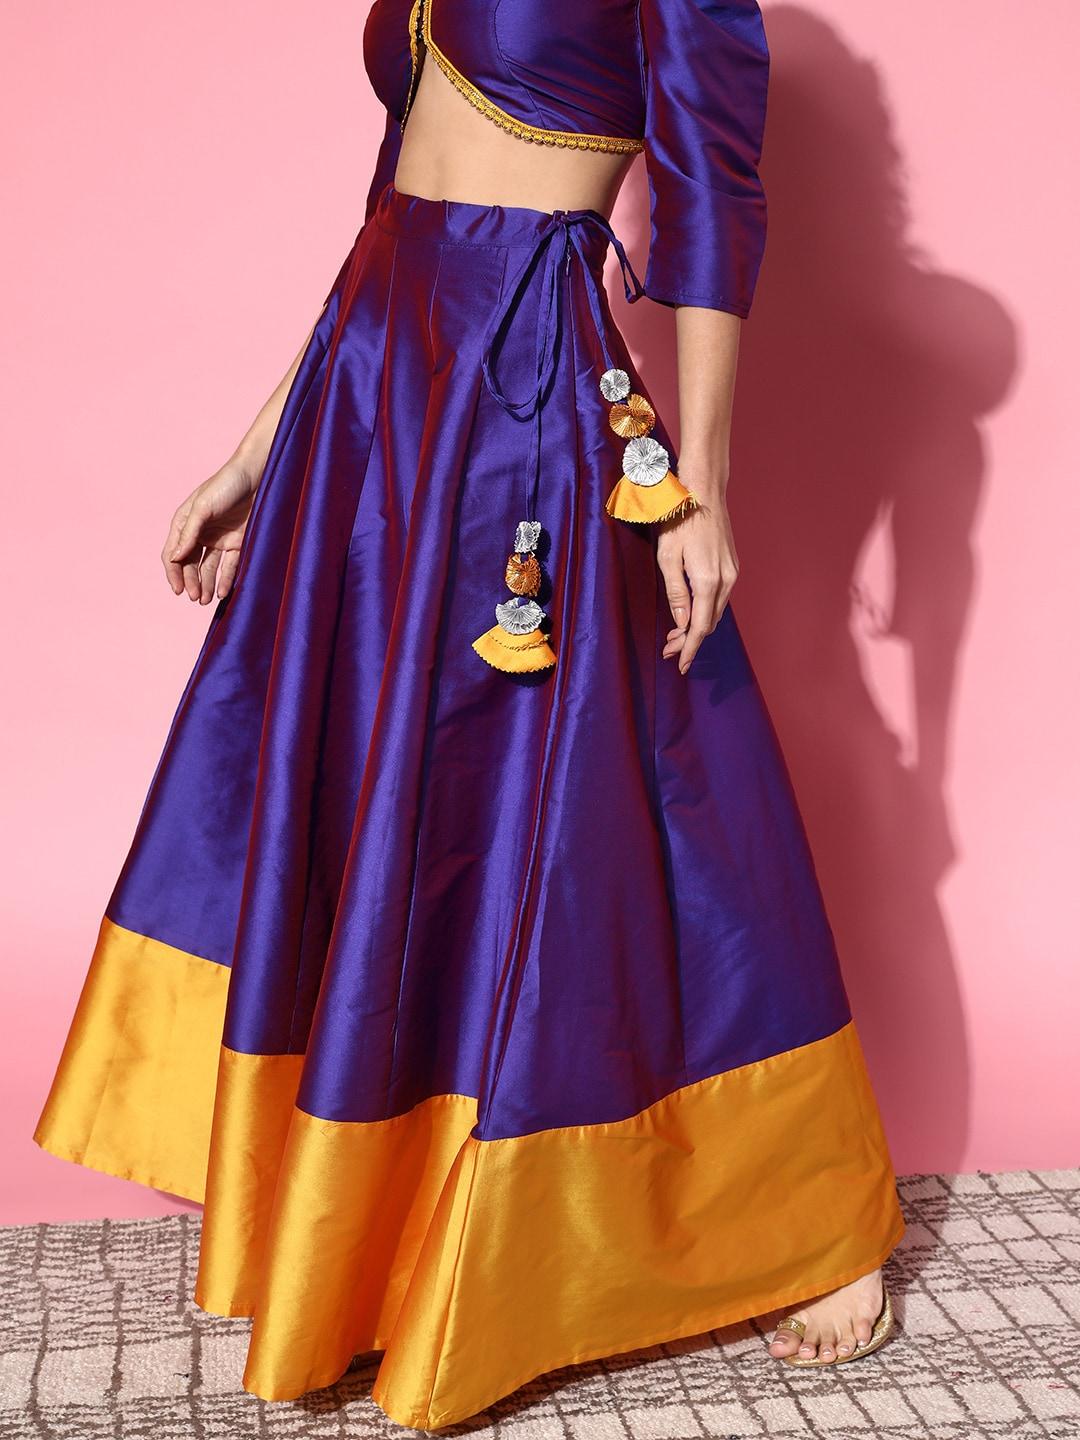 shae by sassafras charming purple solid fluid tie-up skirt